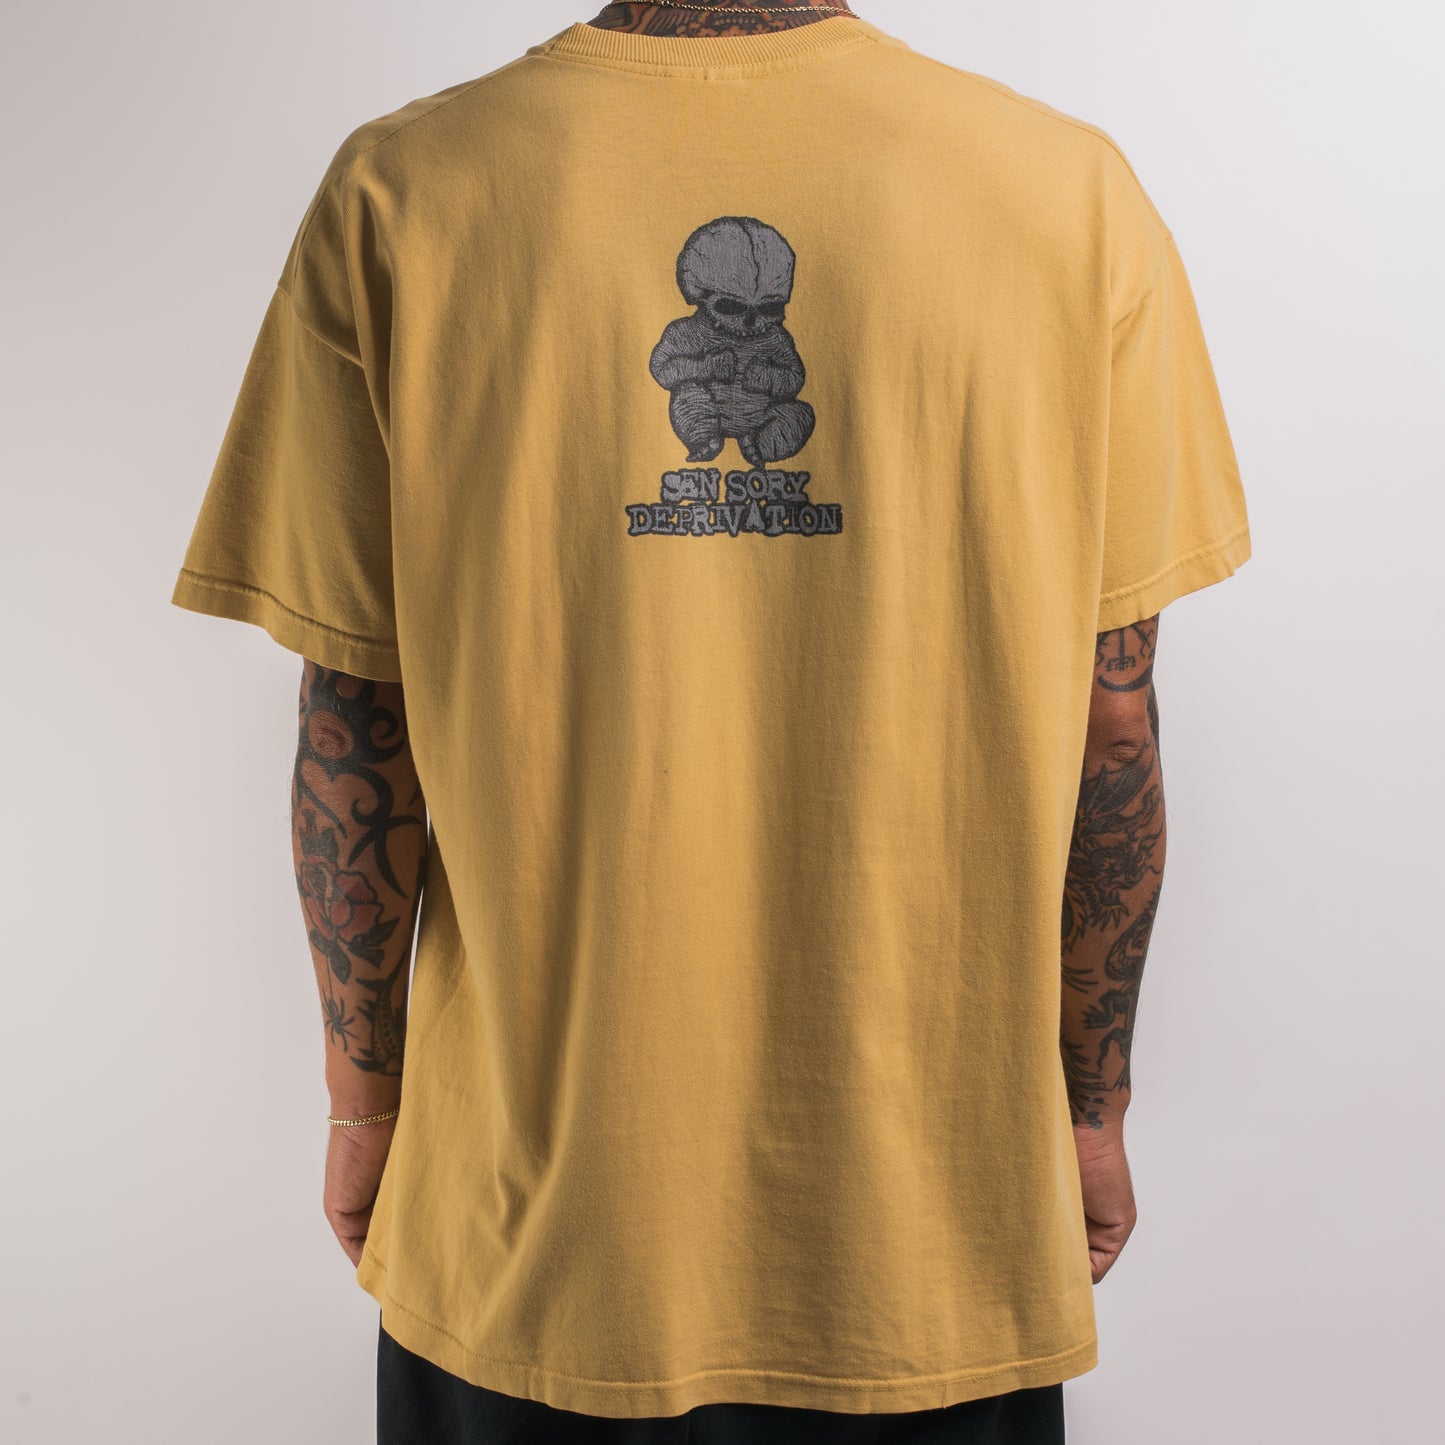 Vintage 90’s Fault Sensory Deprivation T-Shirt